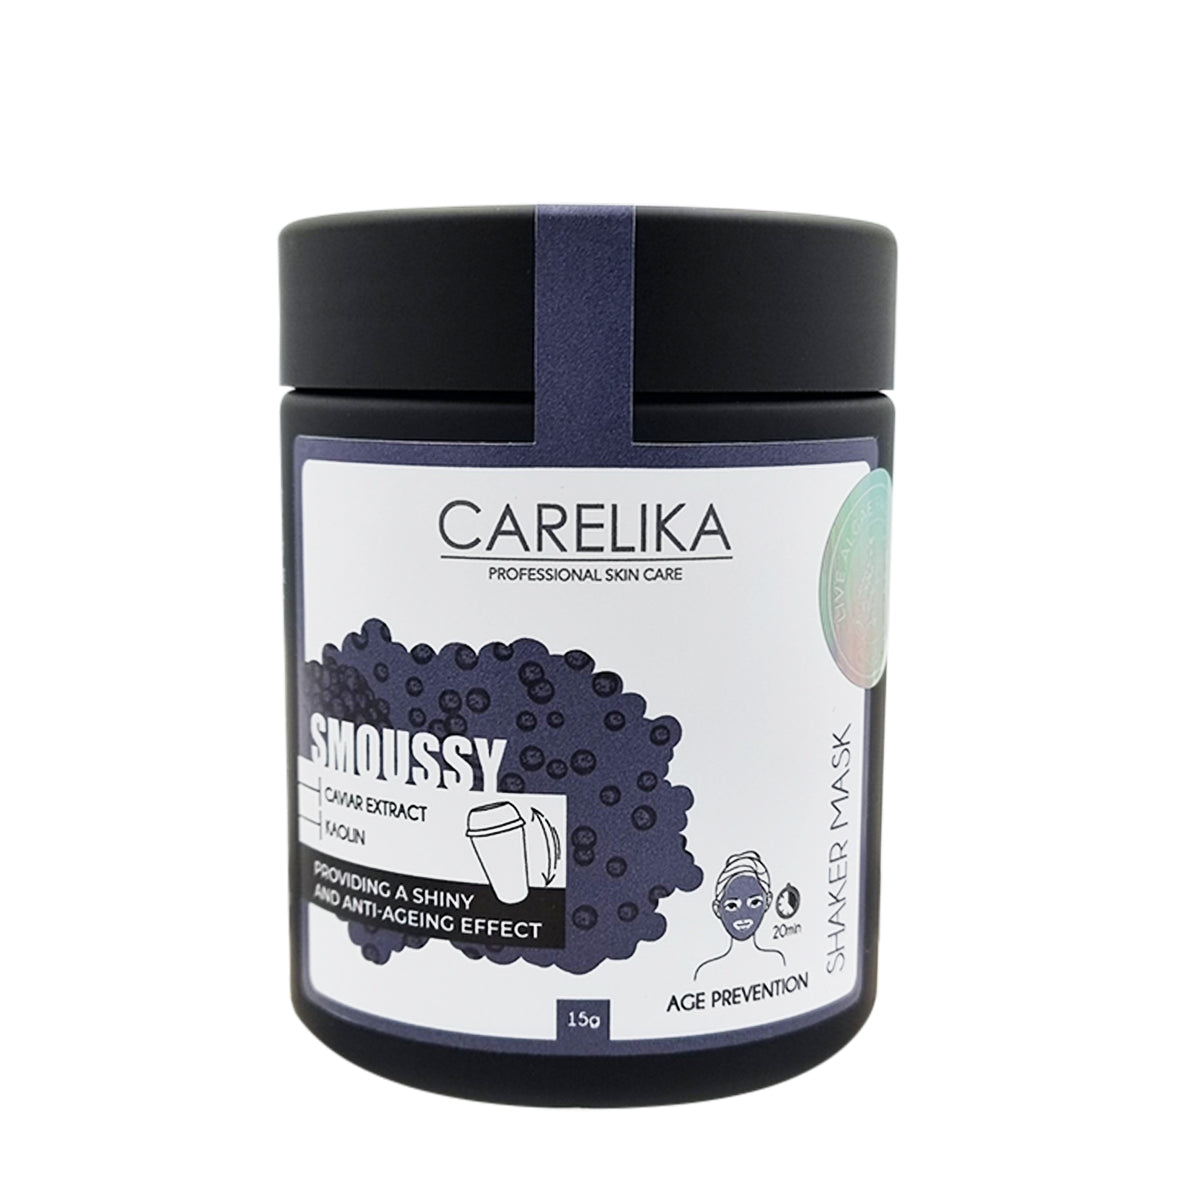 Caviar smoussy shaker mask by CARELIKA Jar 15g | Lika-J